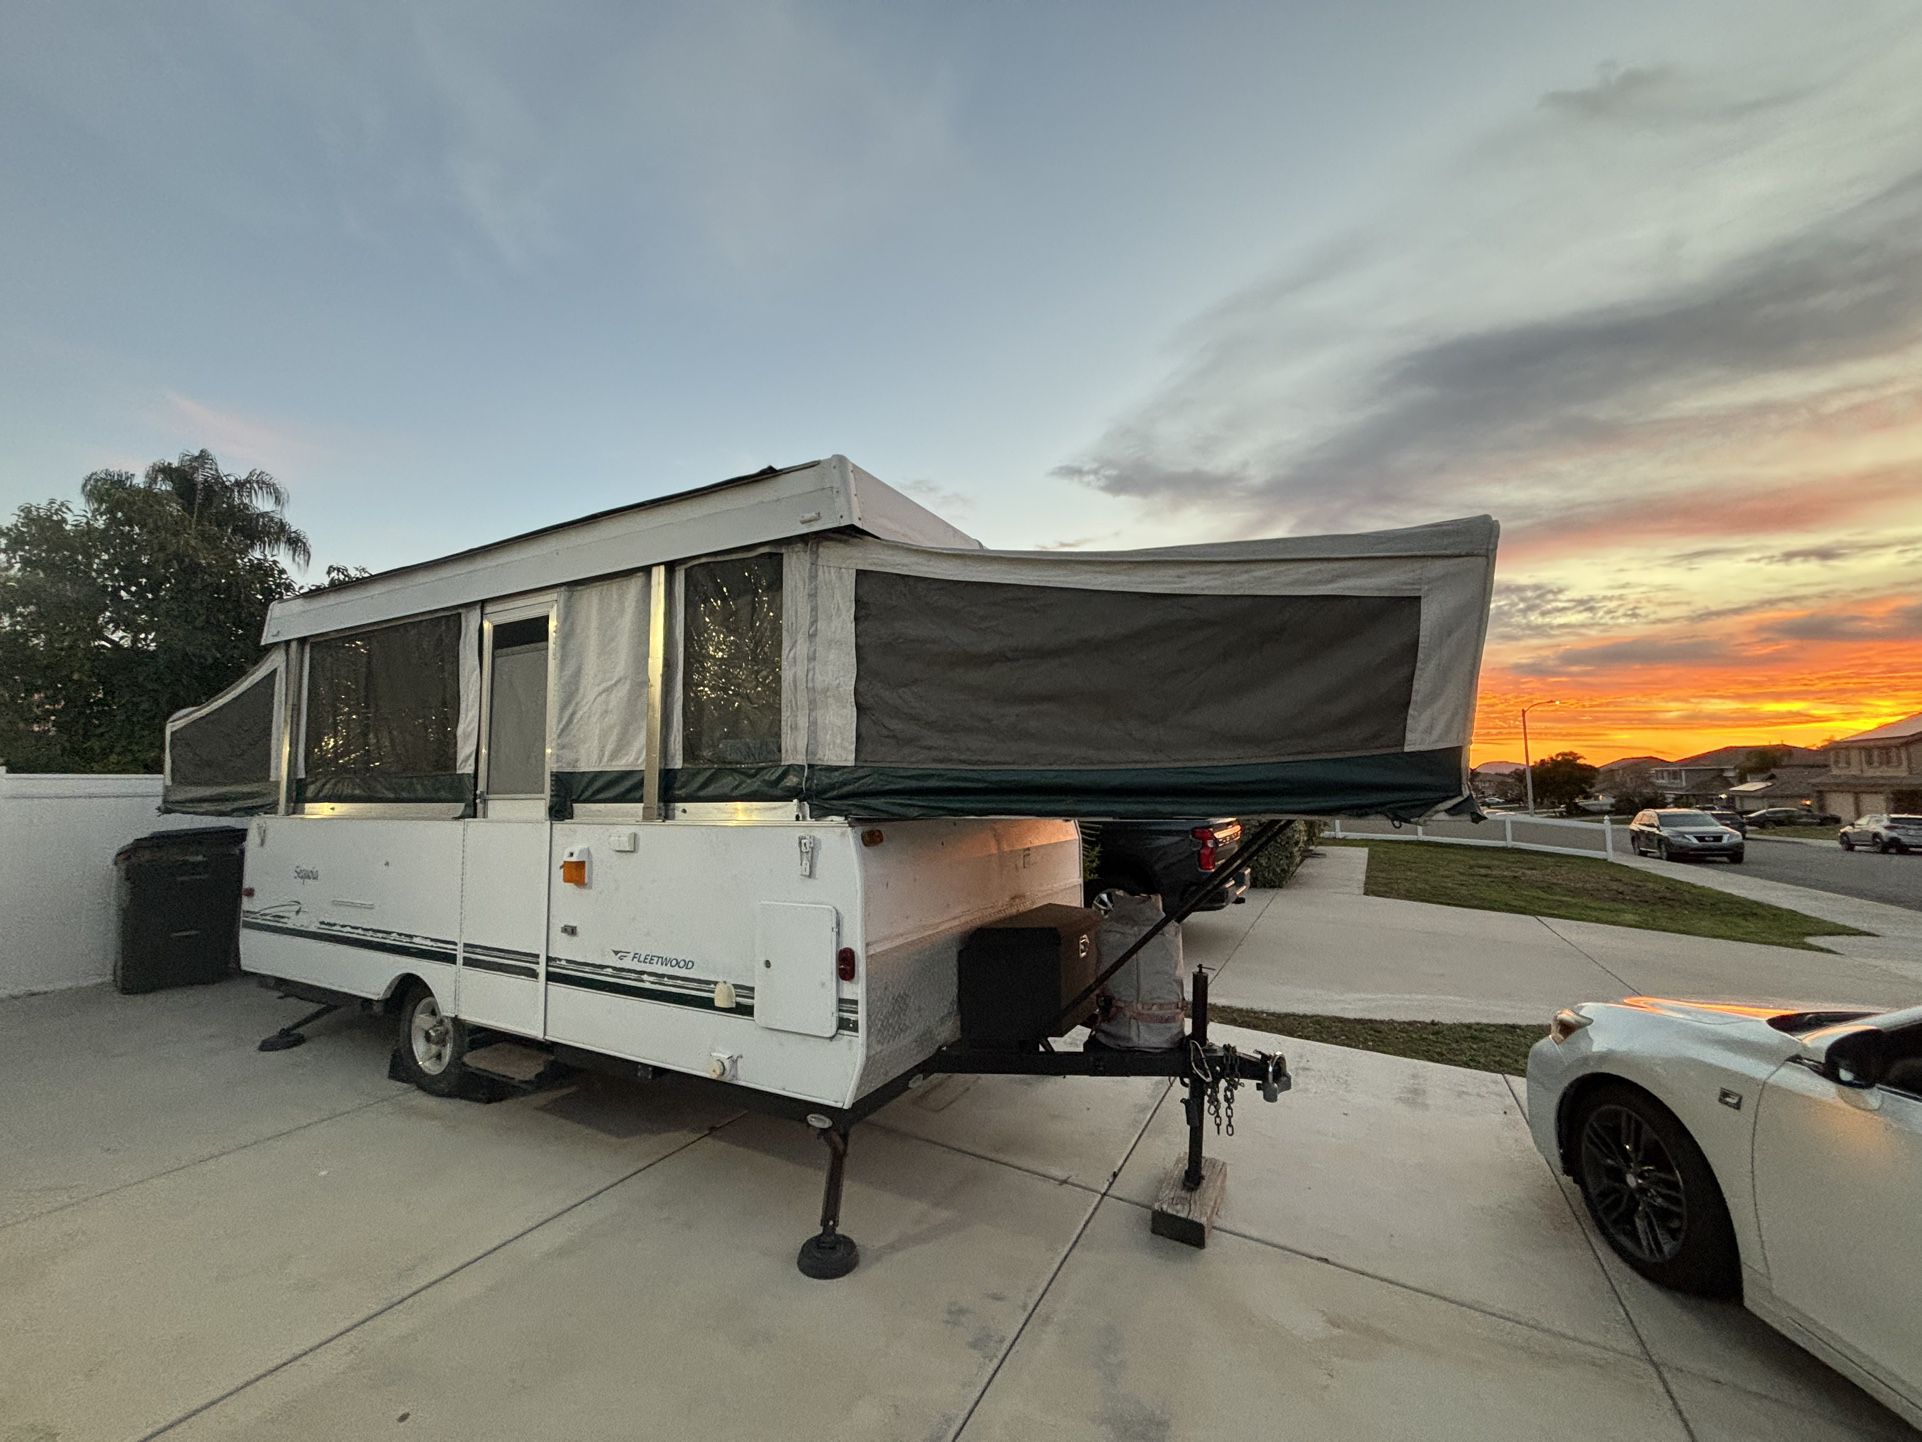 04 Fleetwood Sequoia Pop Up camper trailer For Sale